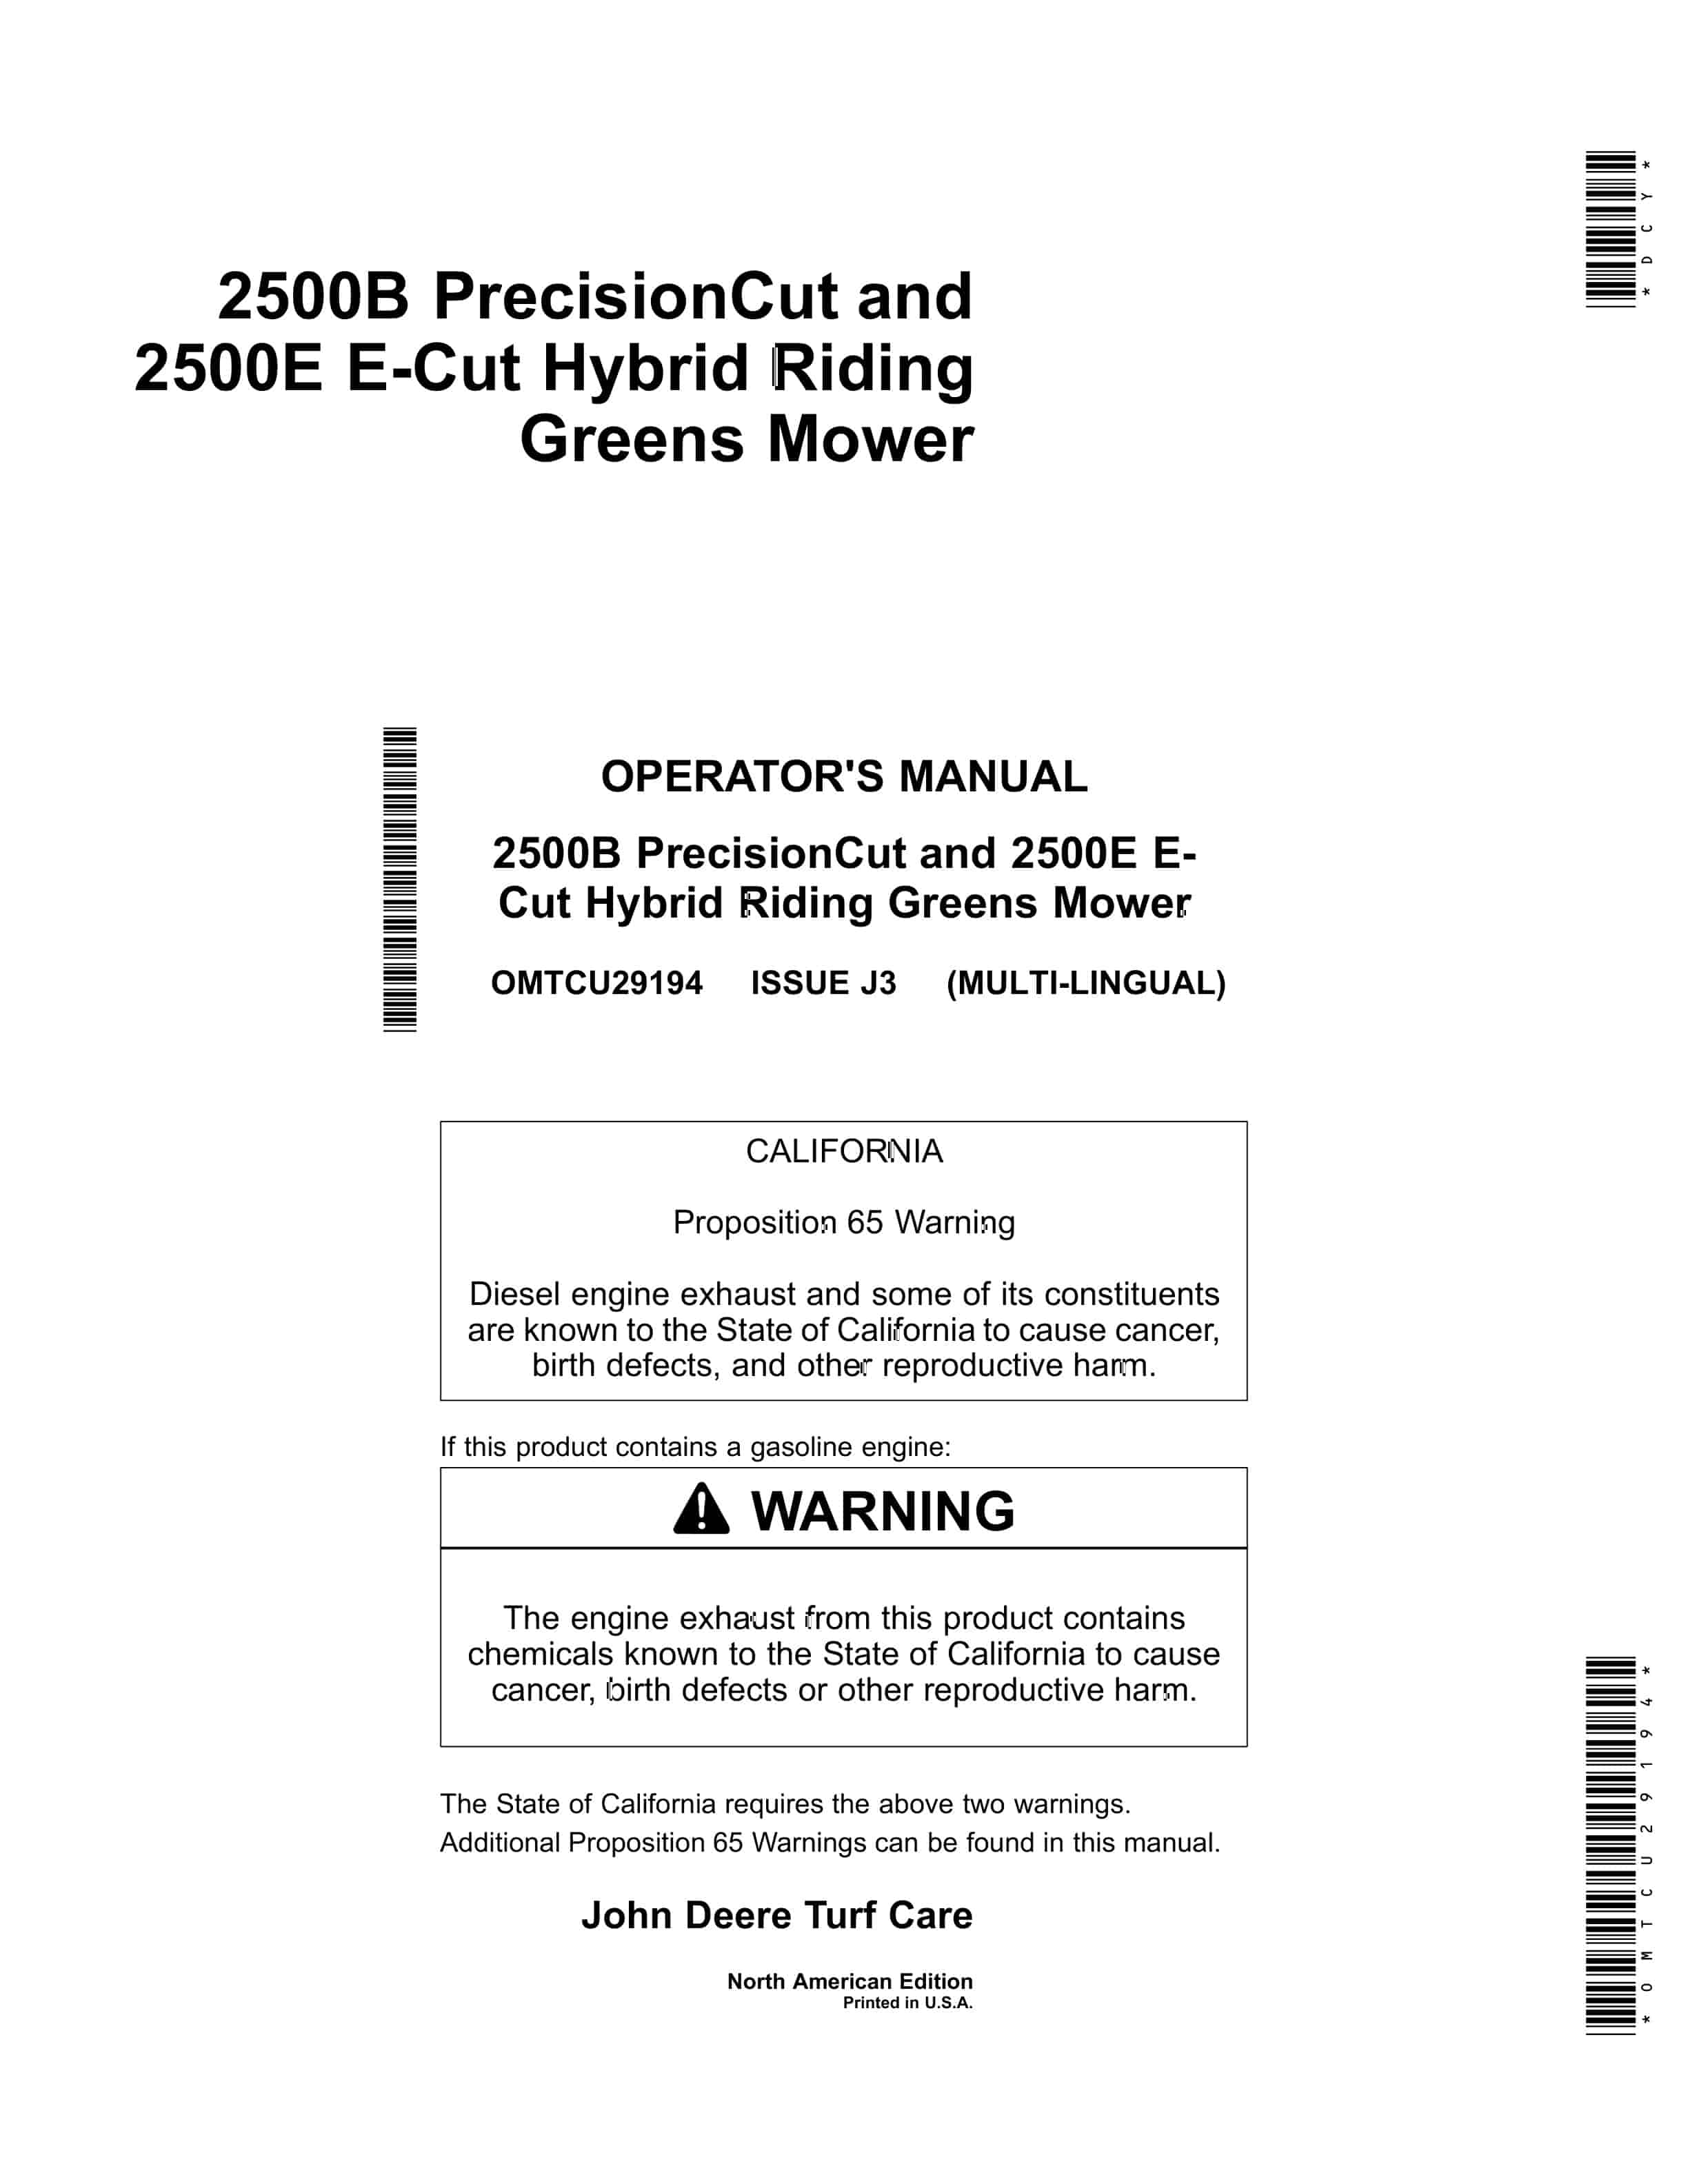 John Deere 2500B PrecisionCut and 2500E E Cut Hybrid Riding Greens Mower Operator Manual OMTCU29194 1